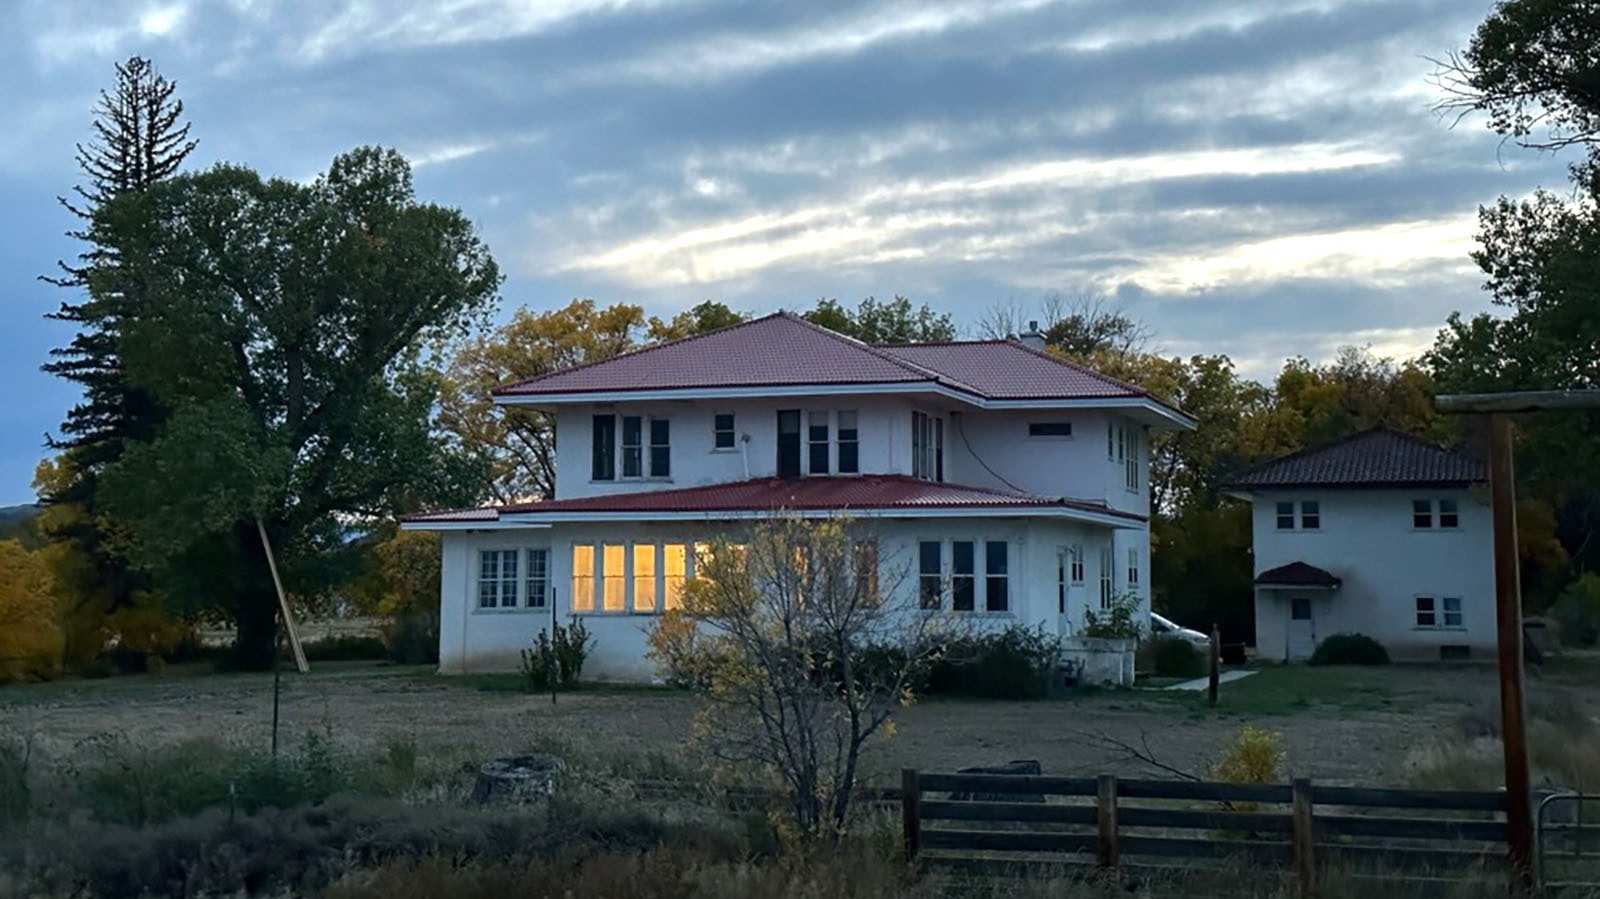 The Arapaho Ranch mansion at dusk.